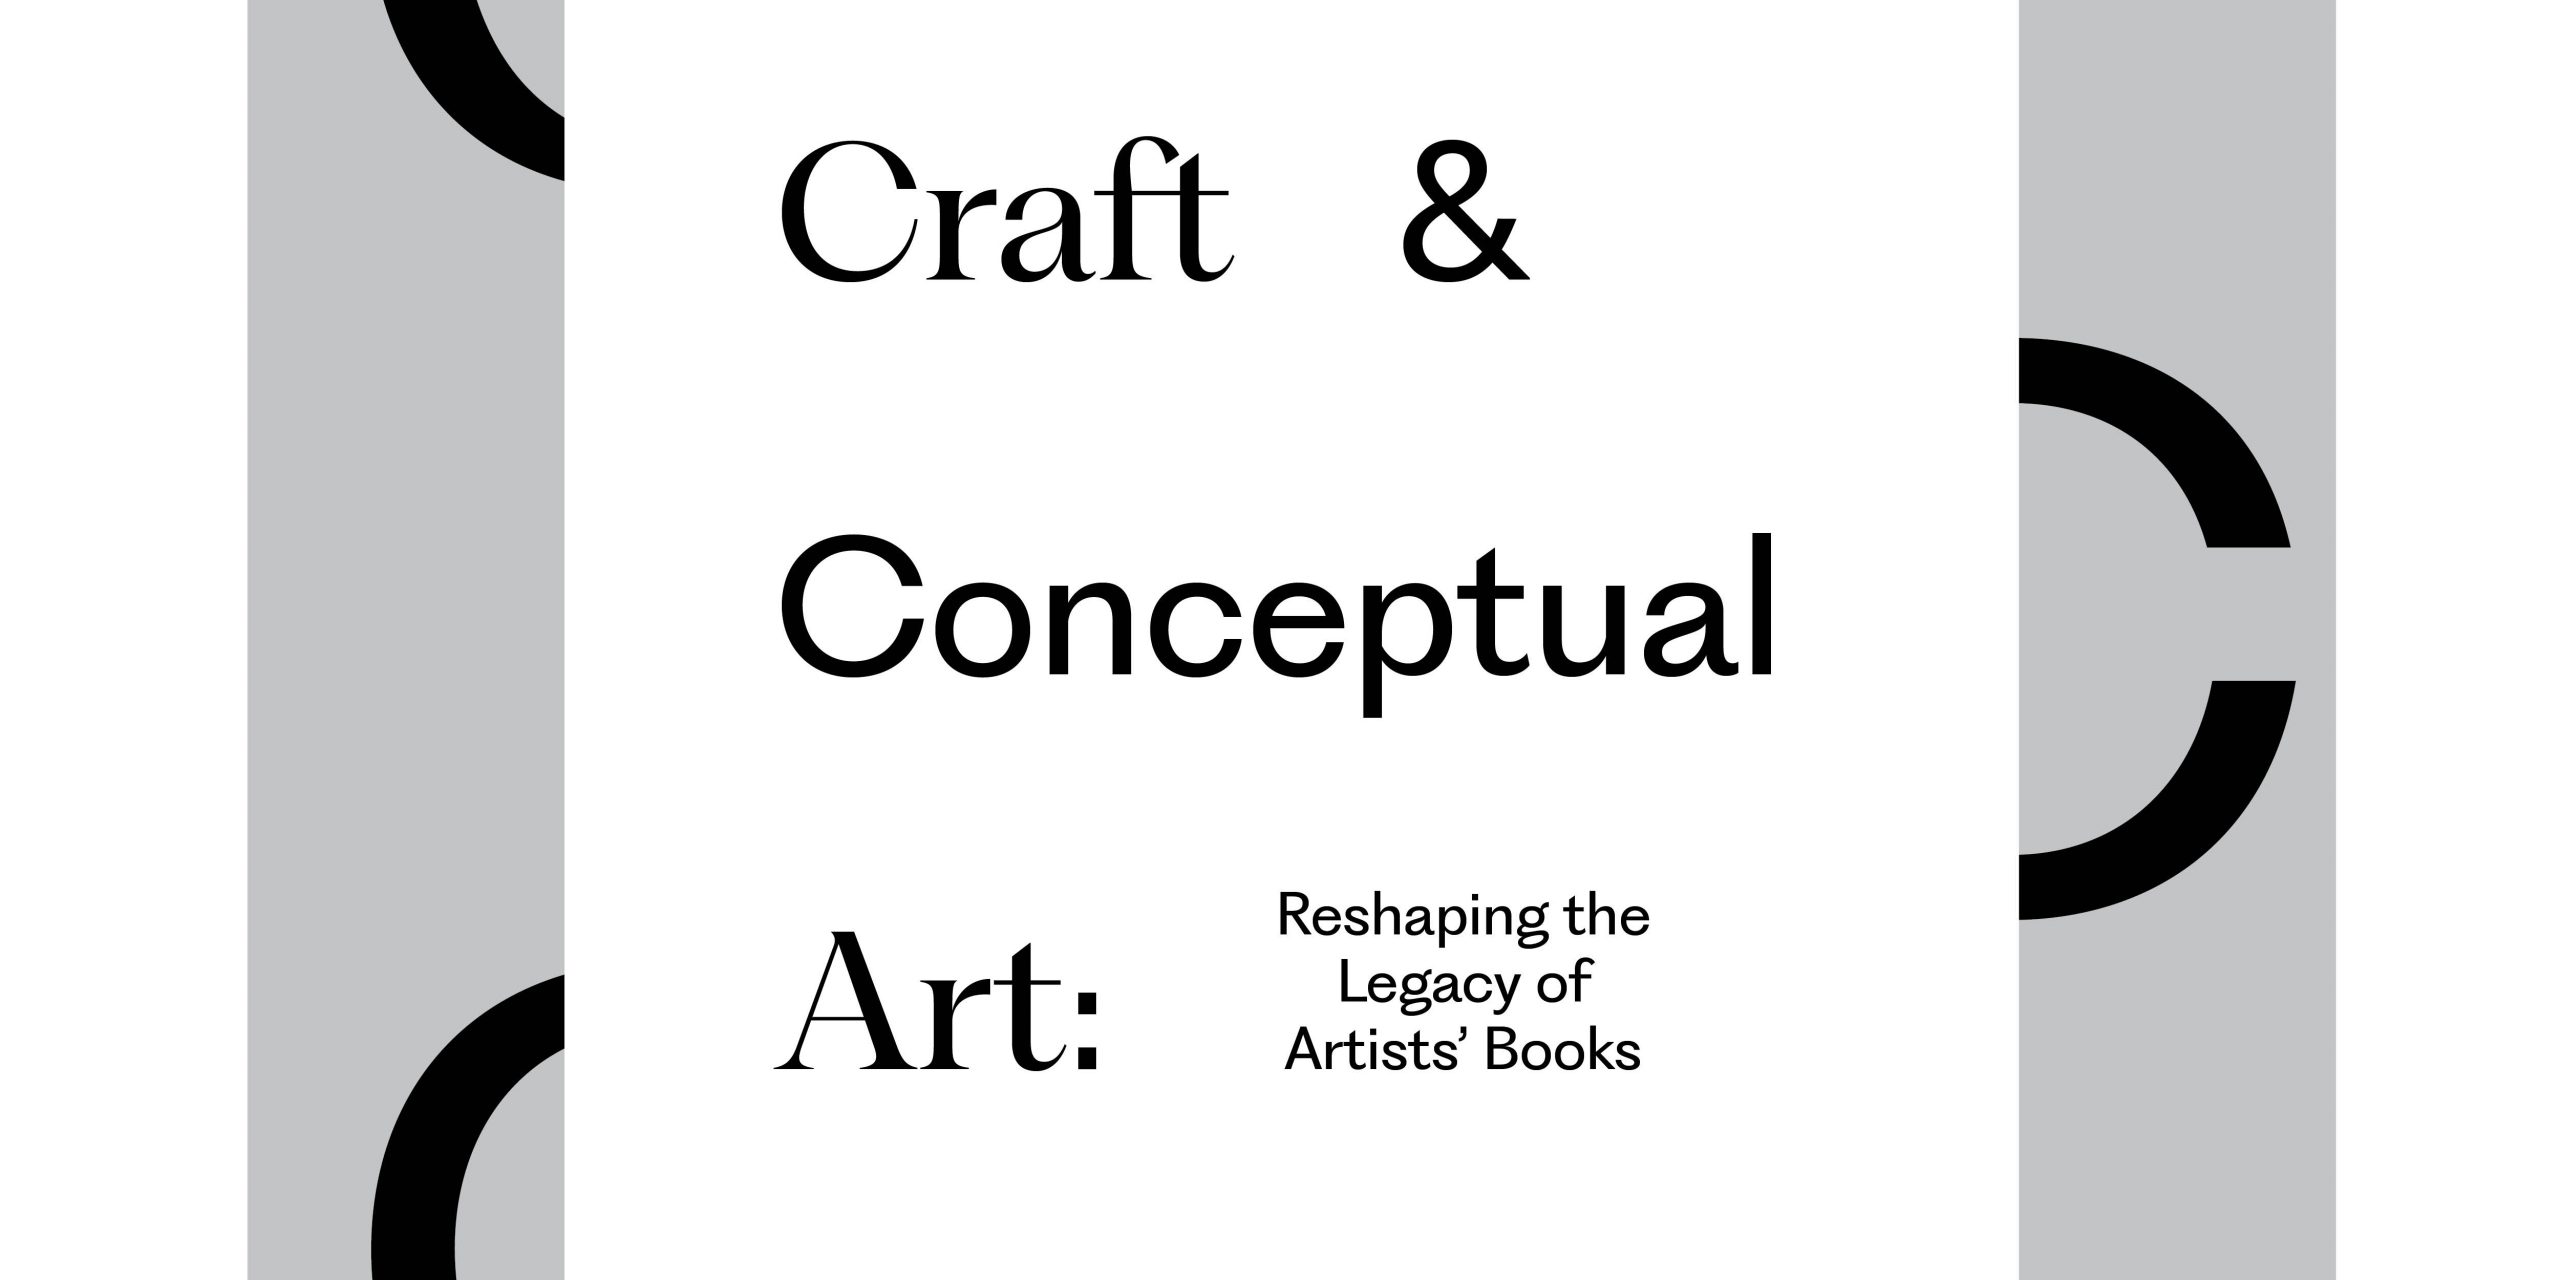 Craft &amp; Conceptual Art